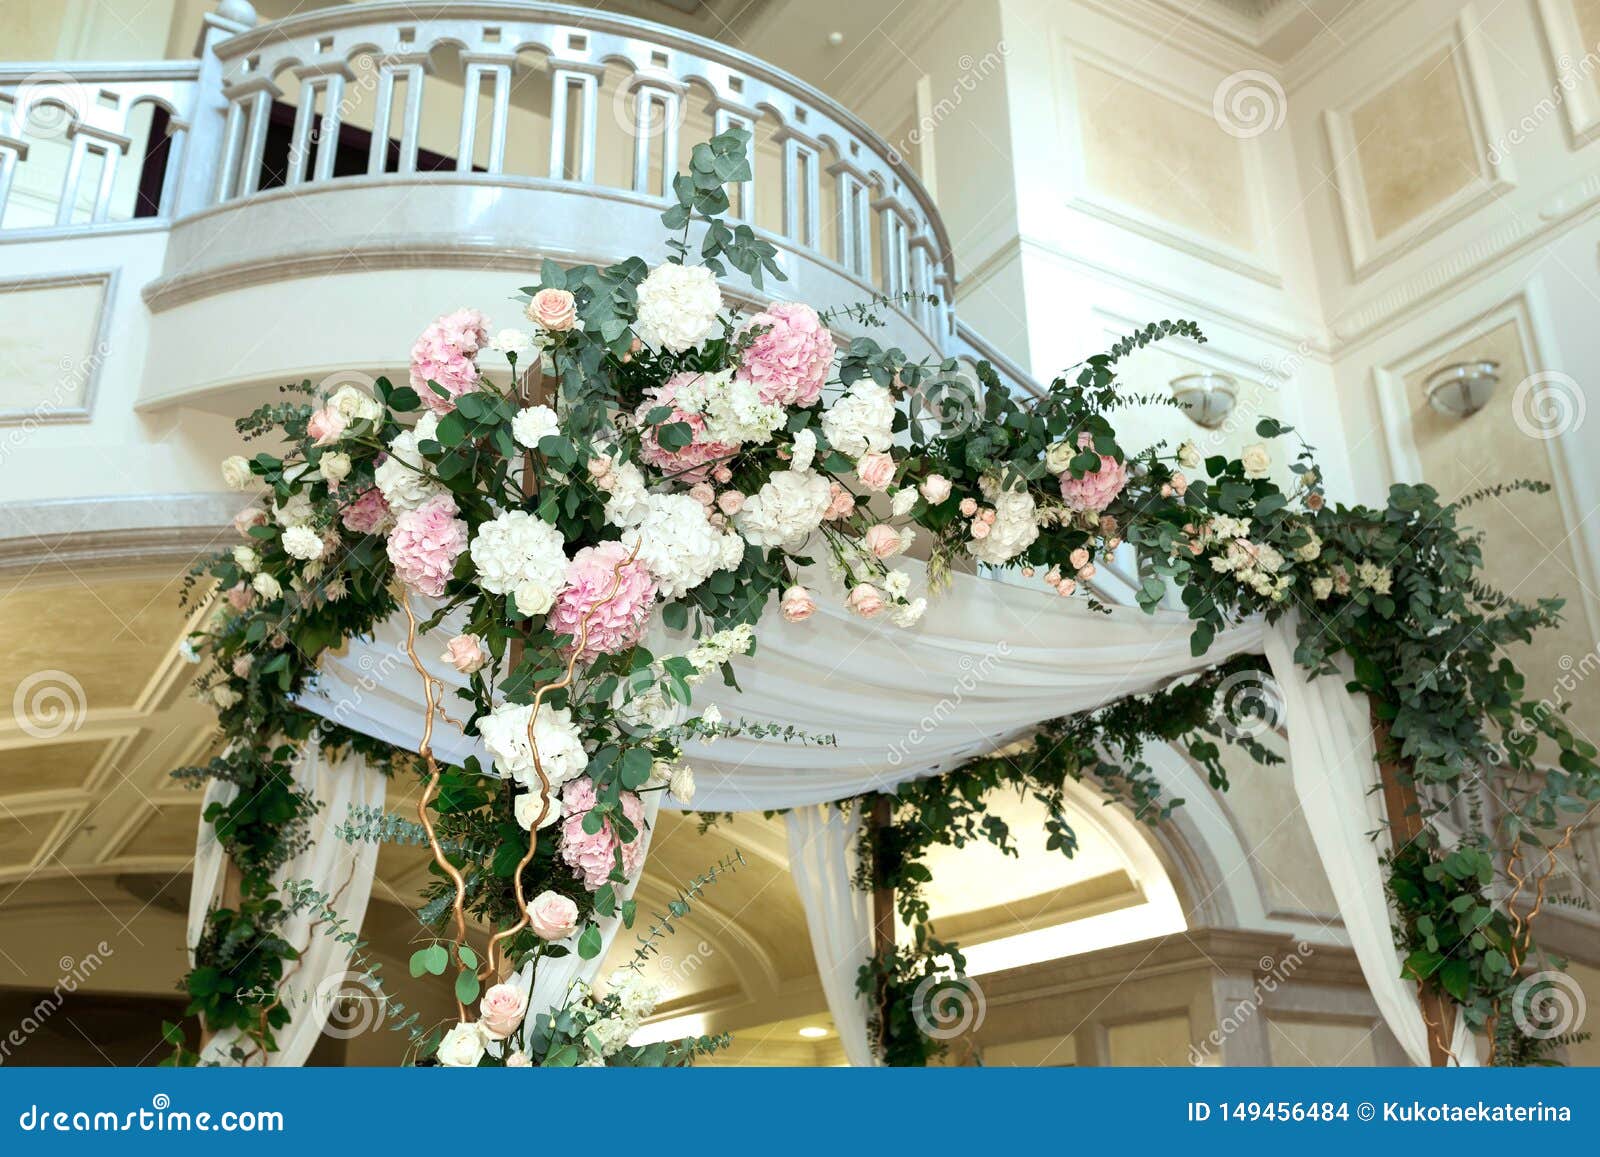 Wedding Chuppah Decorated With Fresh Flowers Indoor Banquet Hall Of Wedding Ceremony Luxury Wedding Florist Decoration Artwork Stock Photo Image Of Holiday Huppa 149456484